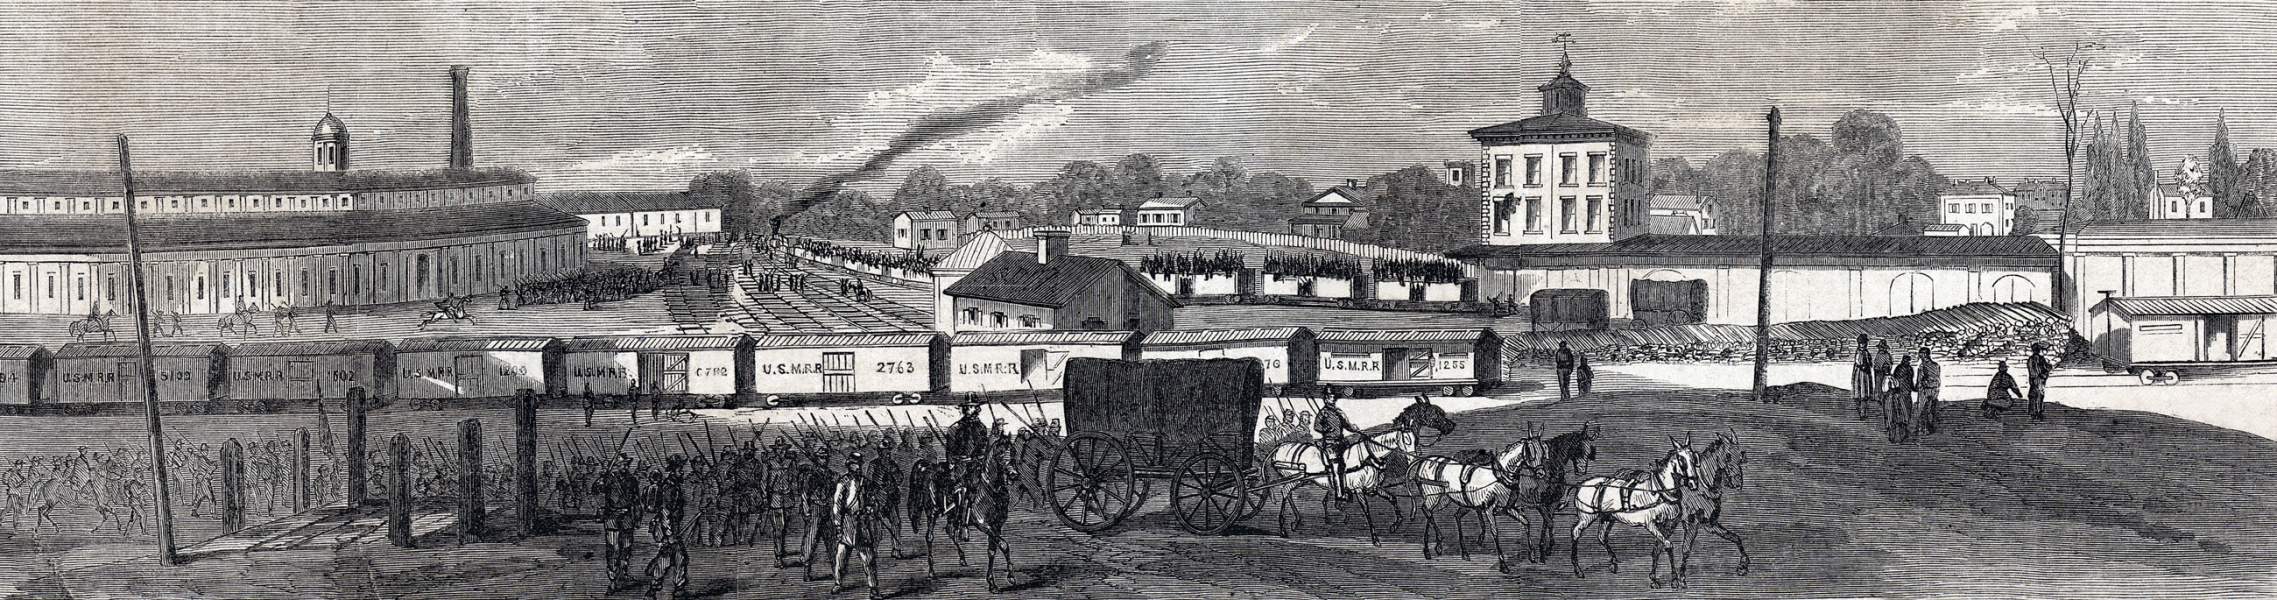 Railroad Depot, Atlanta, Georgia, November 12, 1864, artist's impression, zoomable image